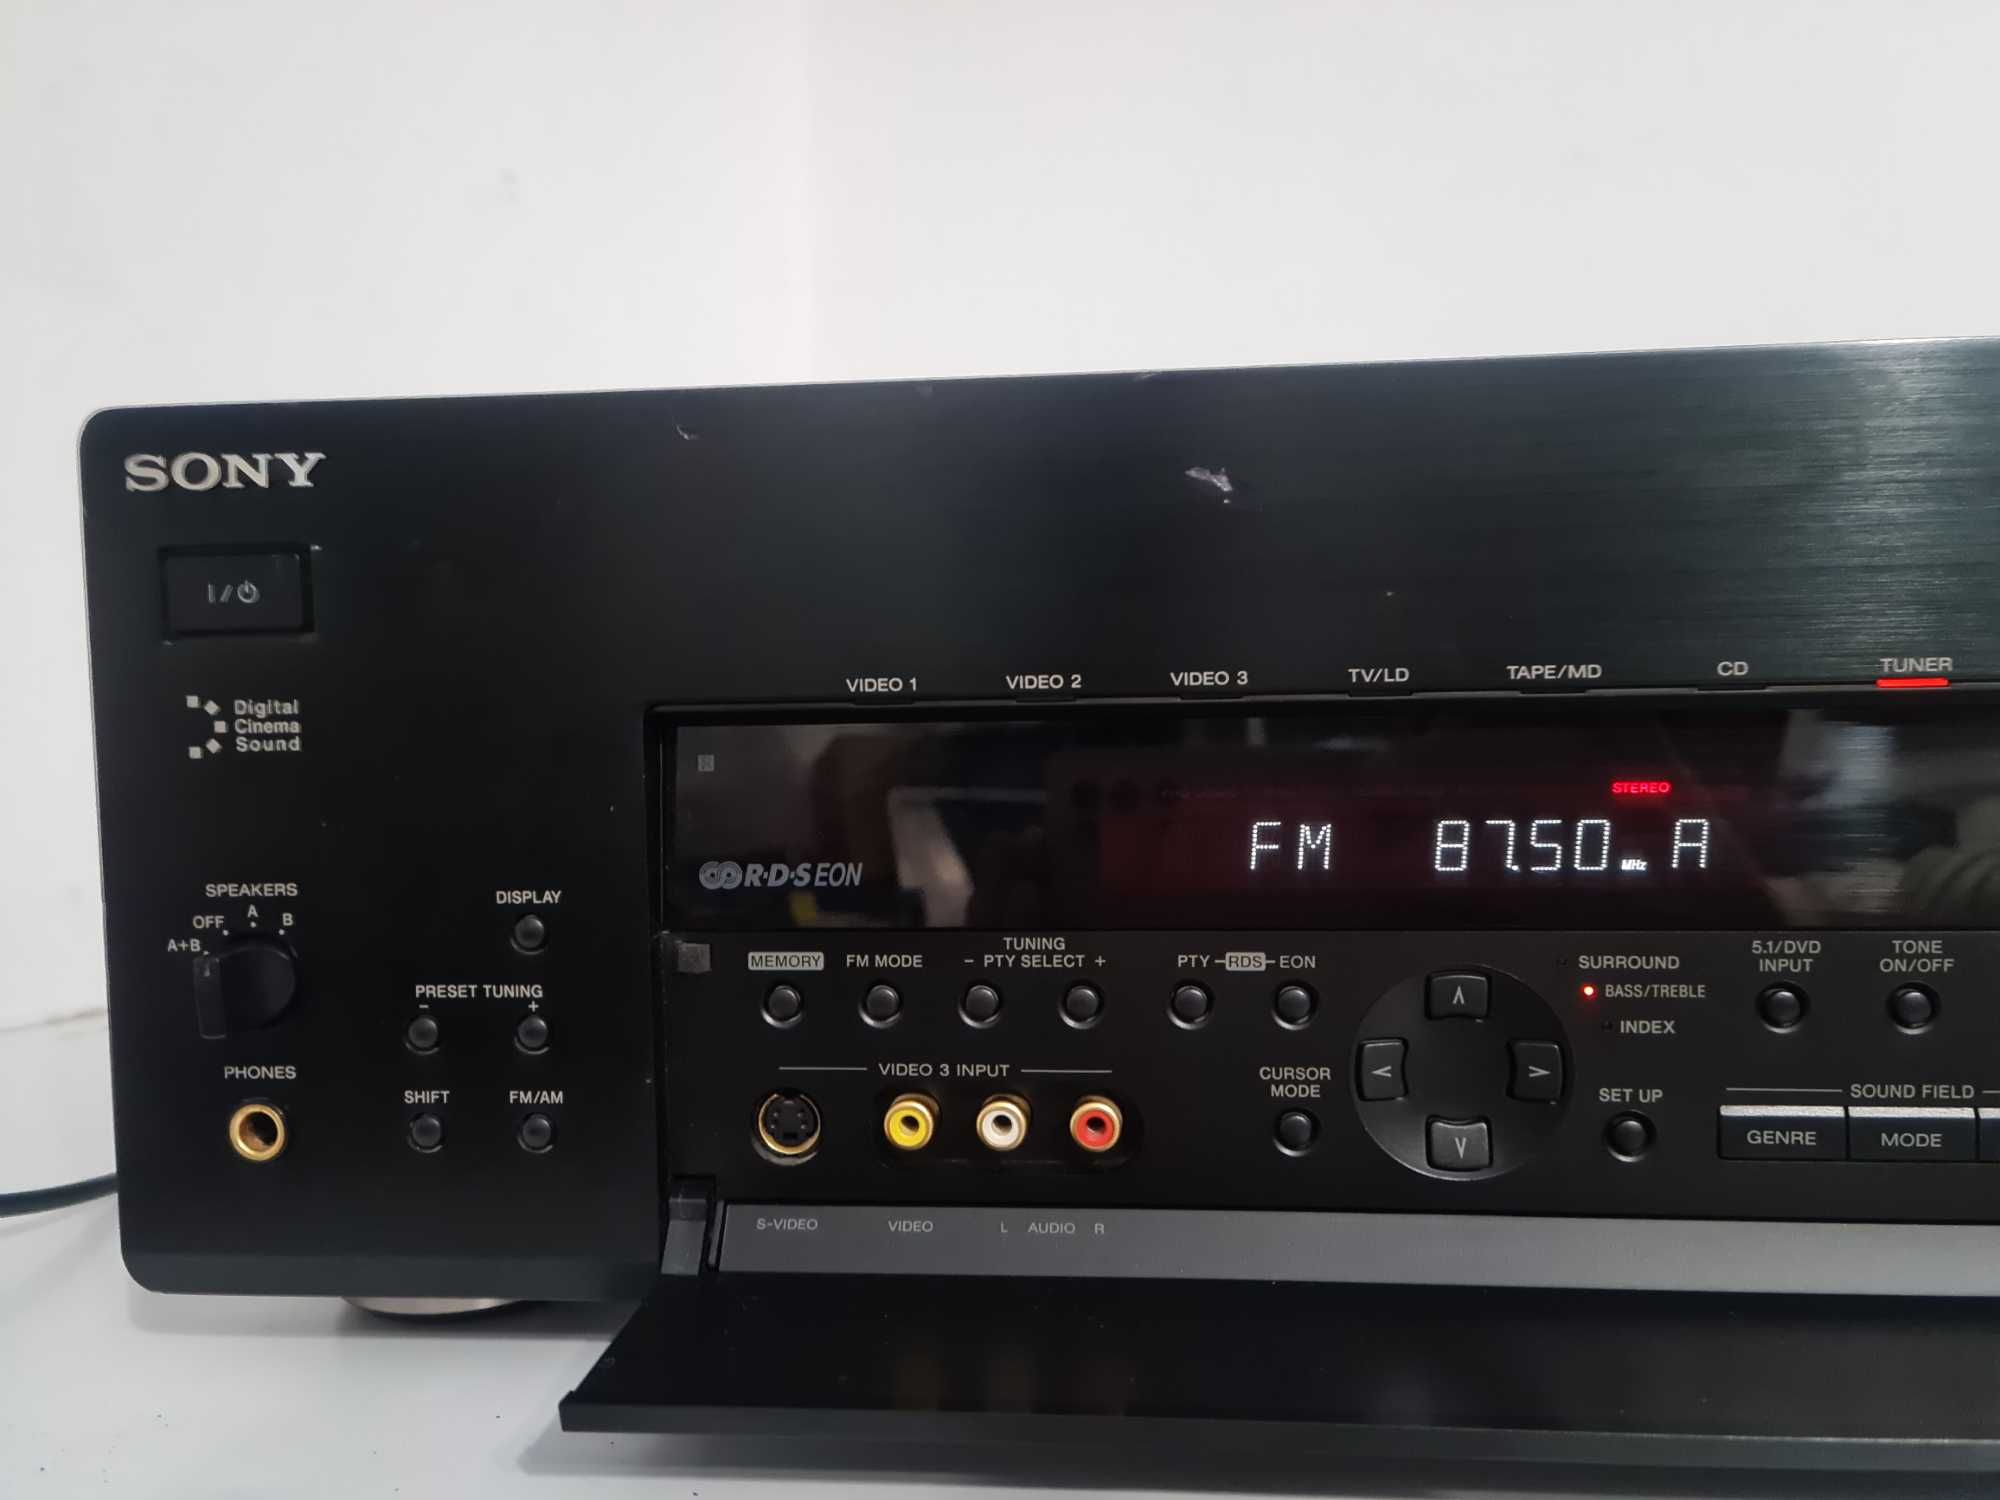 receiver Sony STR-DB725